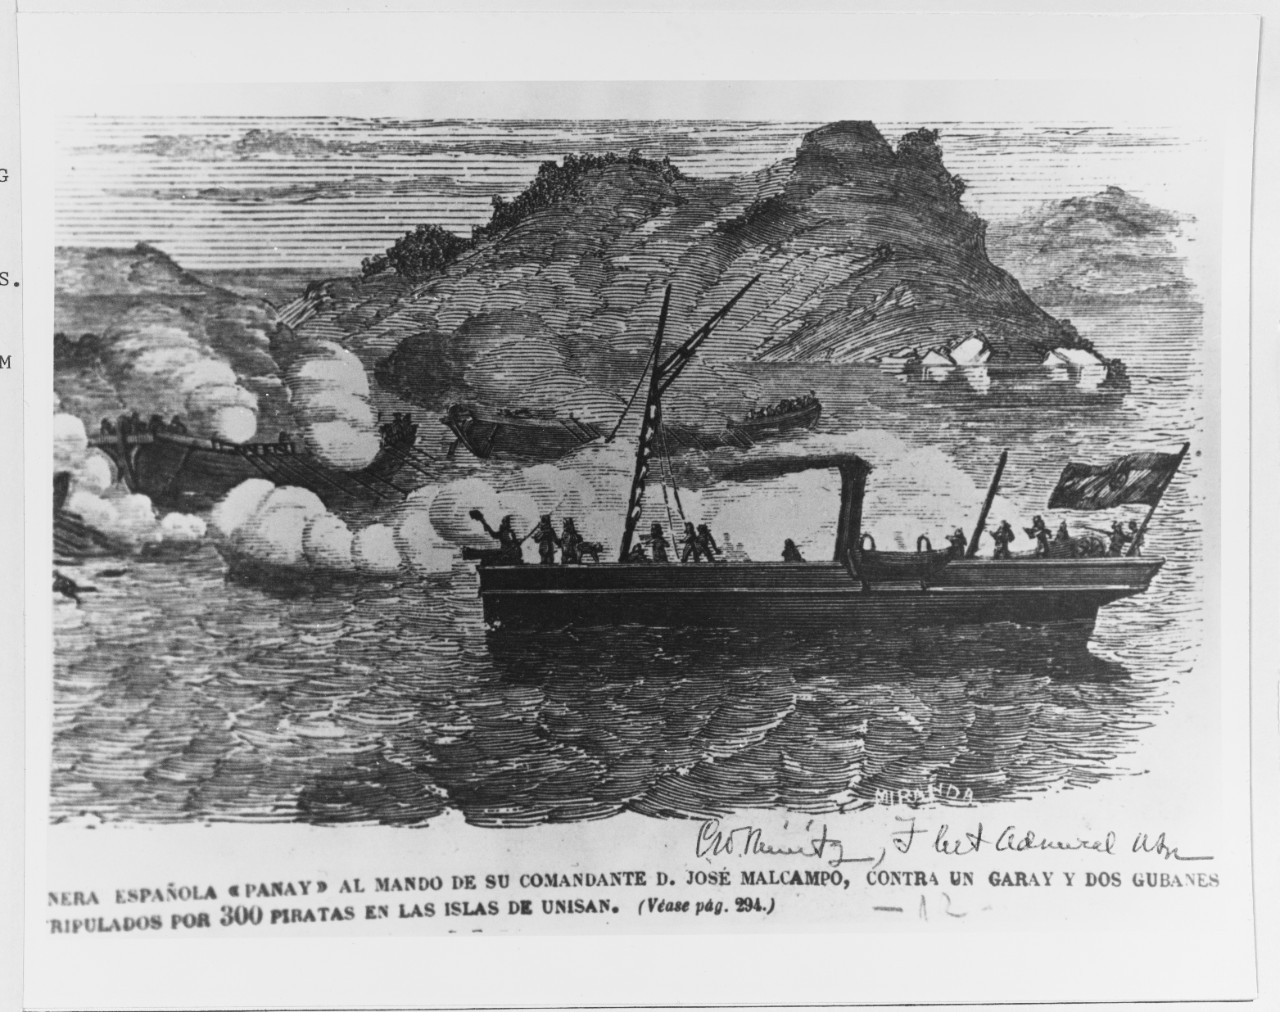 Spanish gunboat PANAY engaging pirates (circa 1890s) in Unisan Islets.